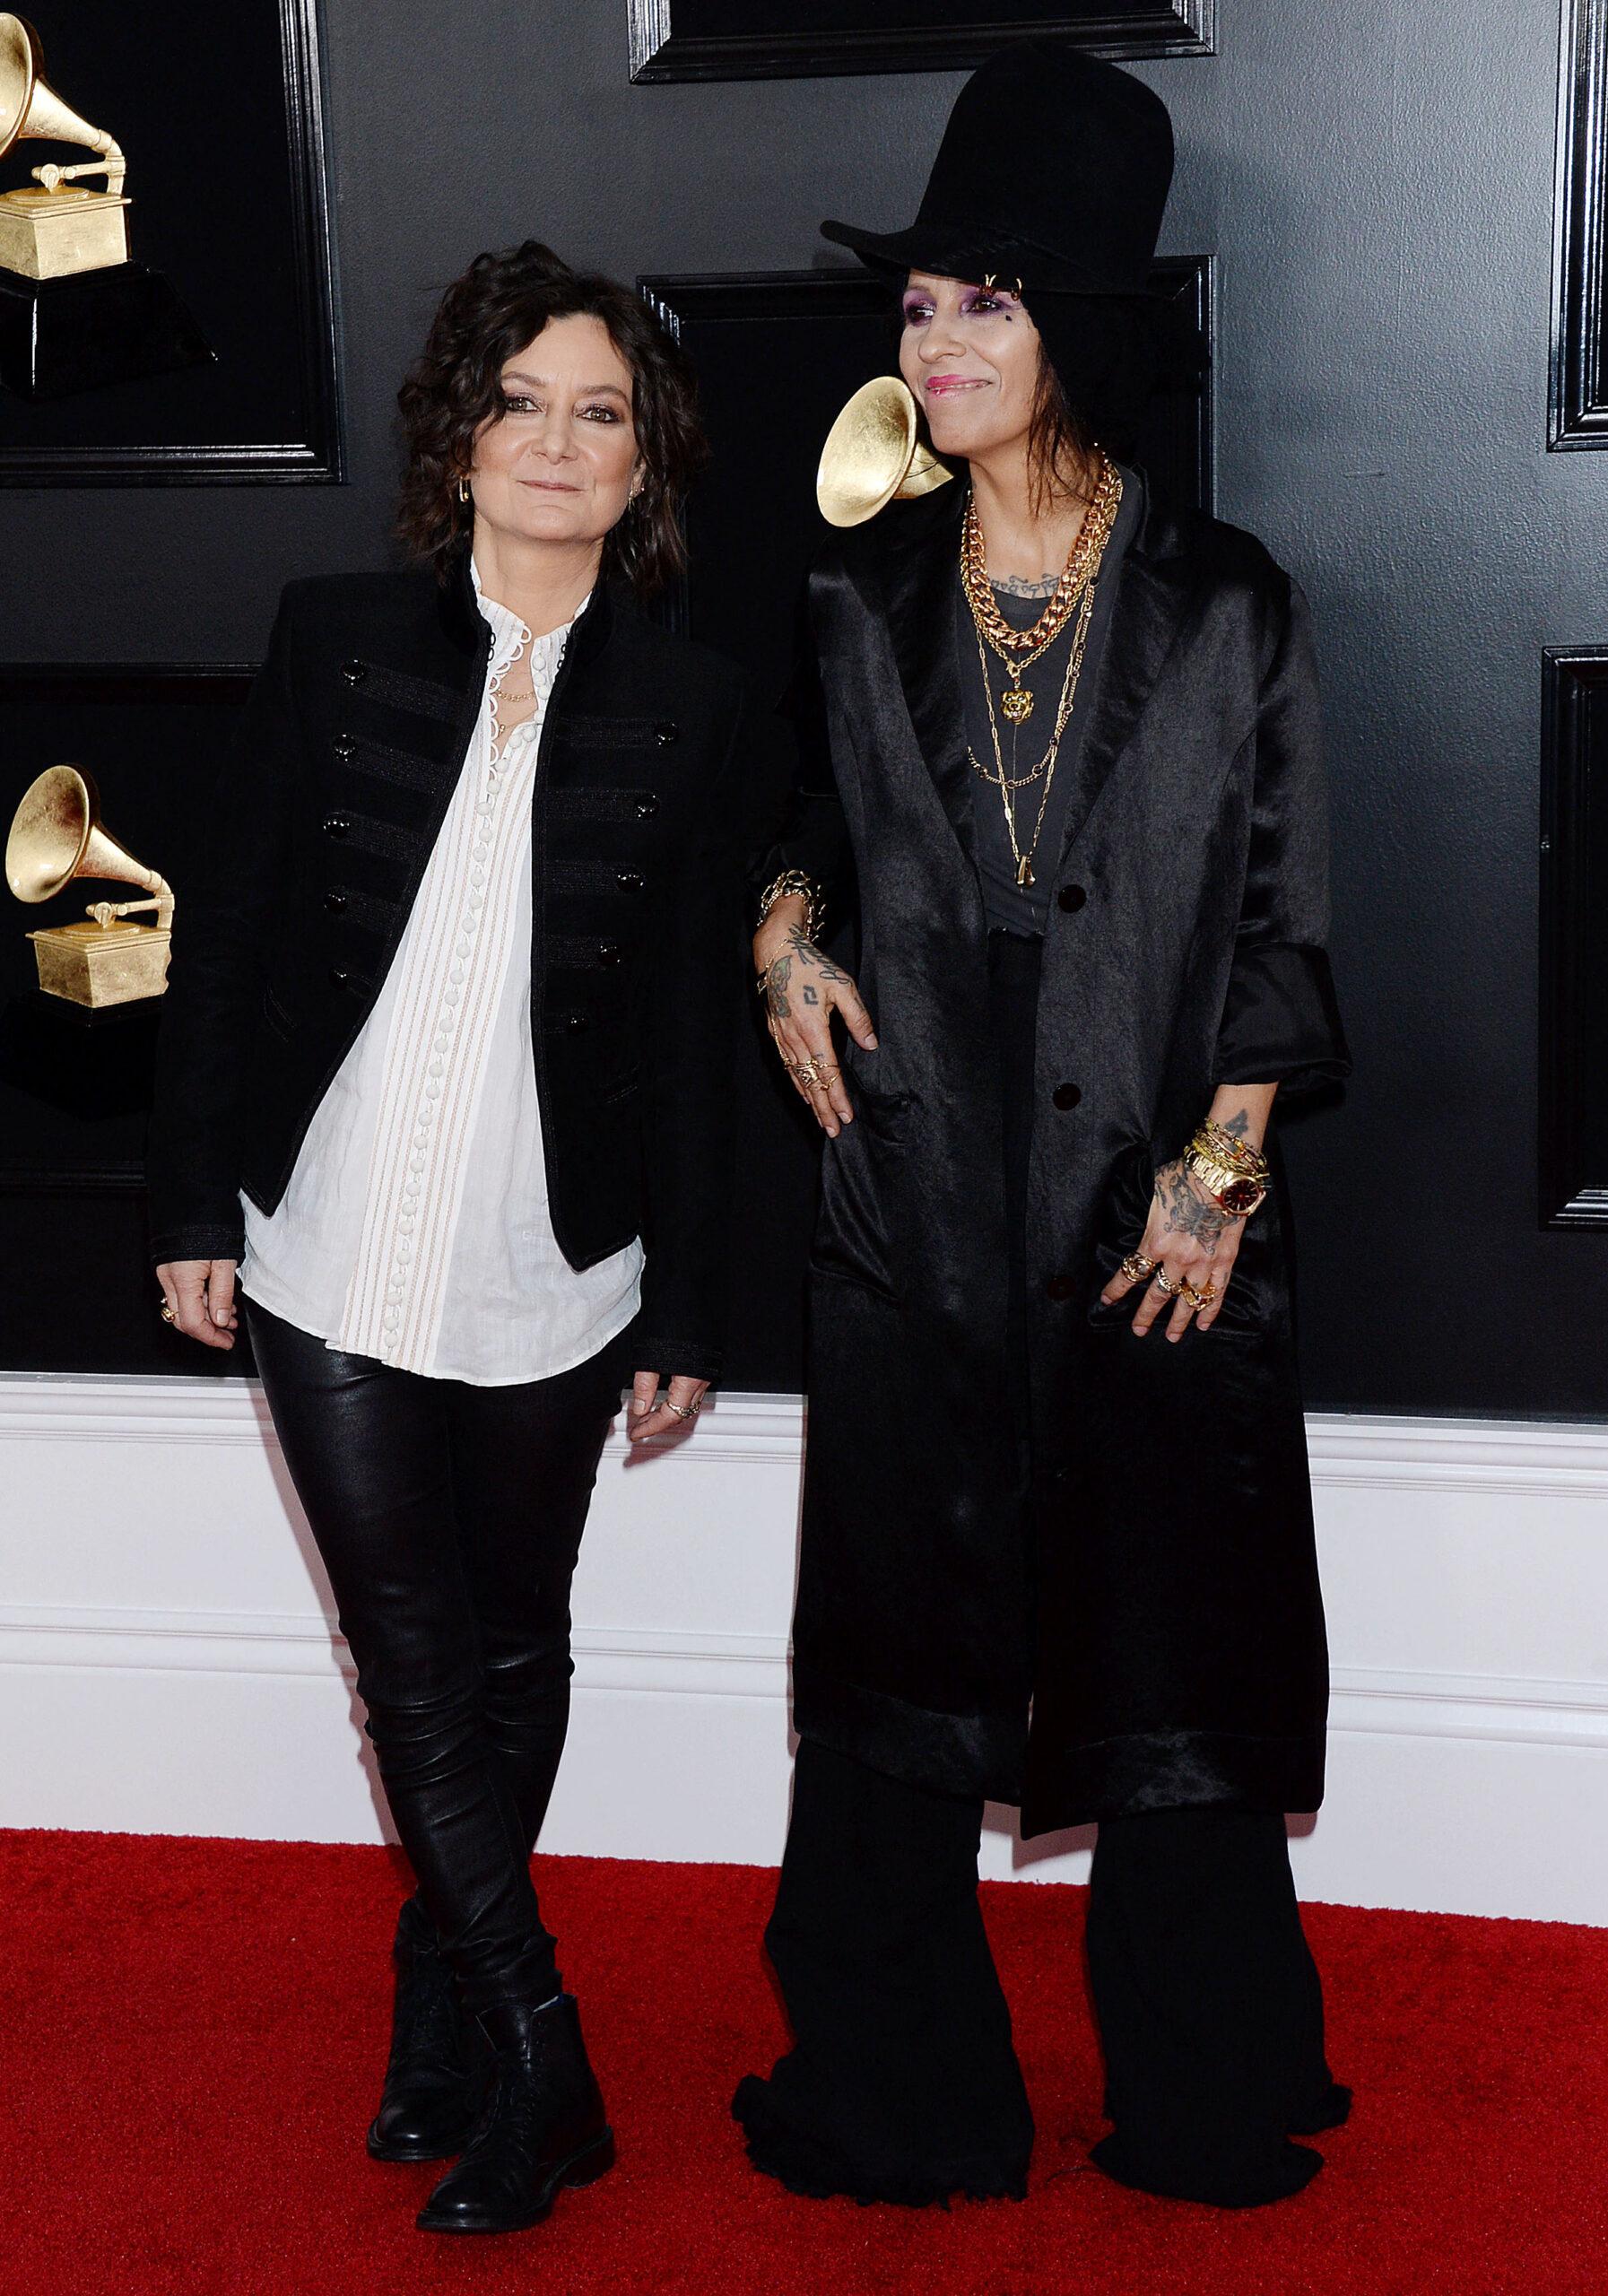 Sara Gilbert and Linda Perry at the 2019 Grammy Awards